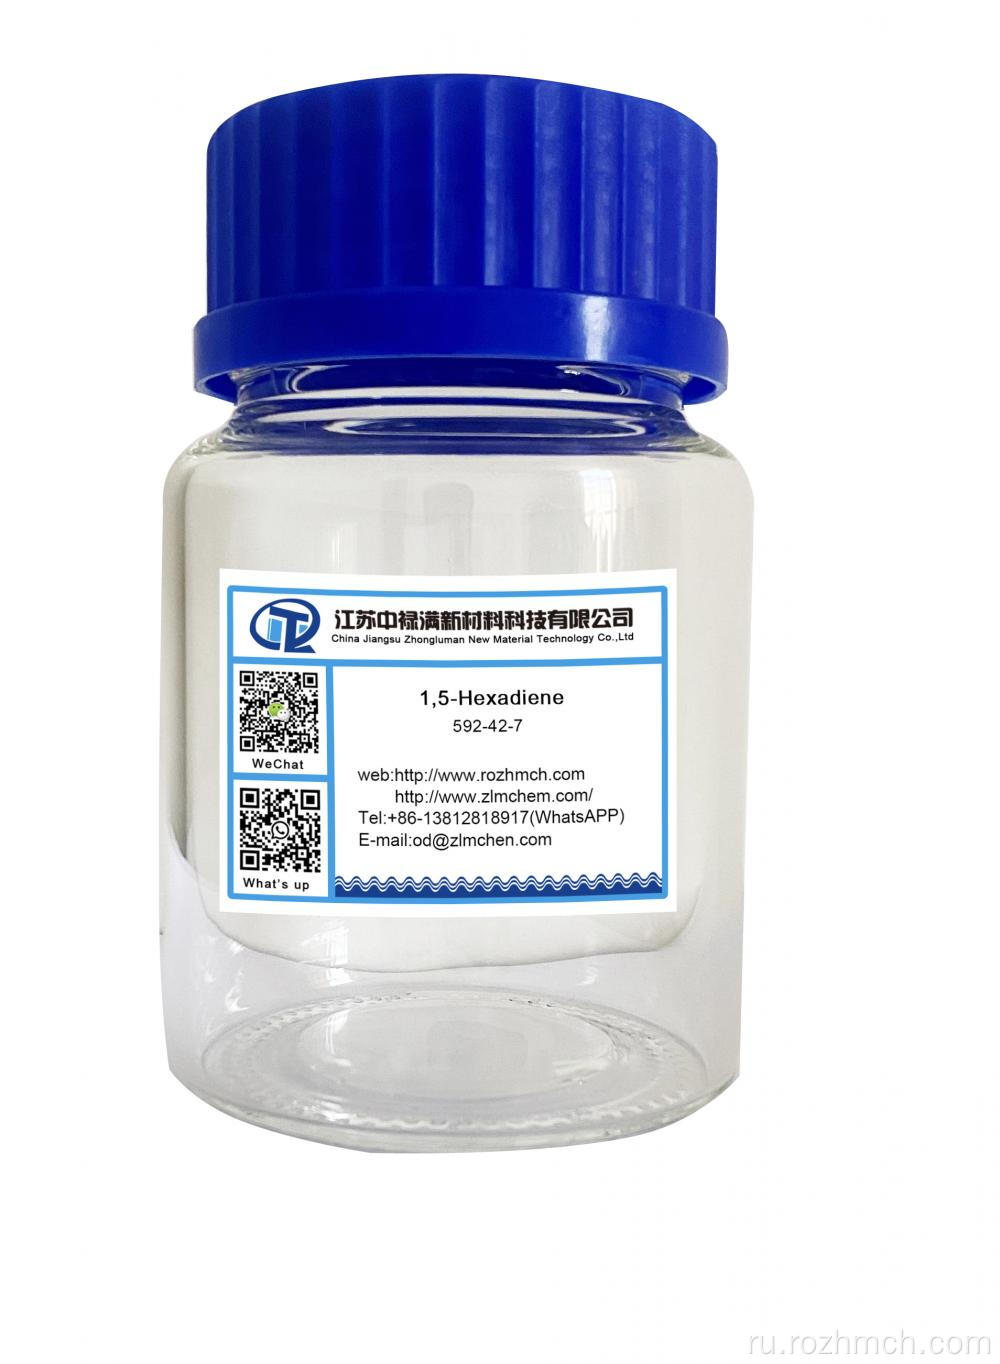 1 5-гексадиен CAS 592-42-7